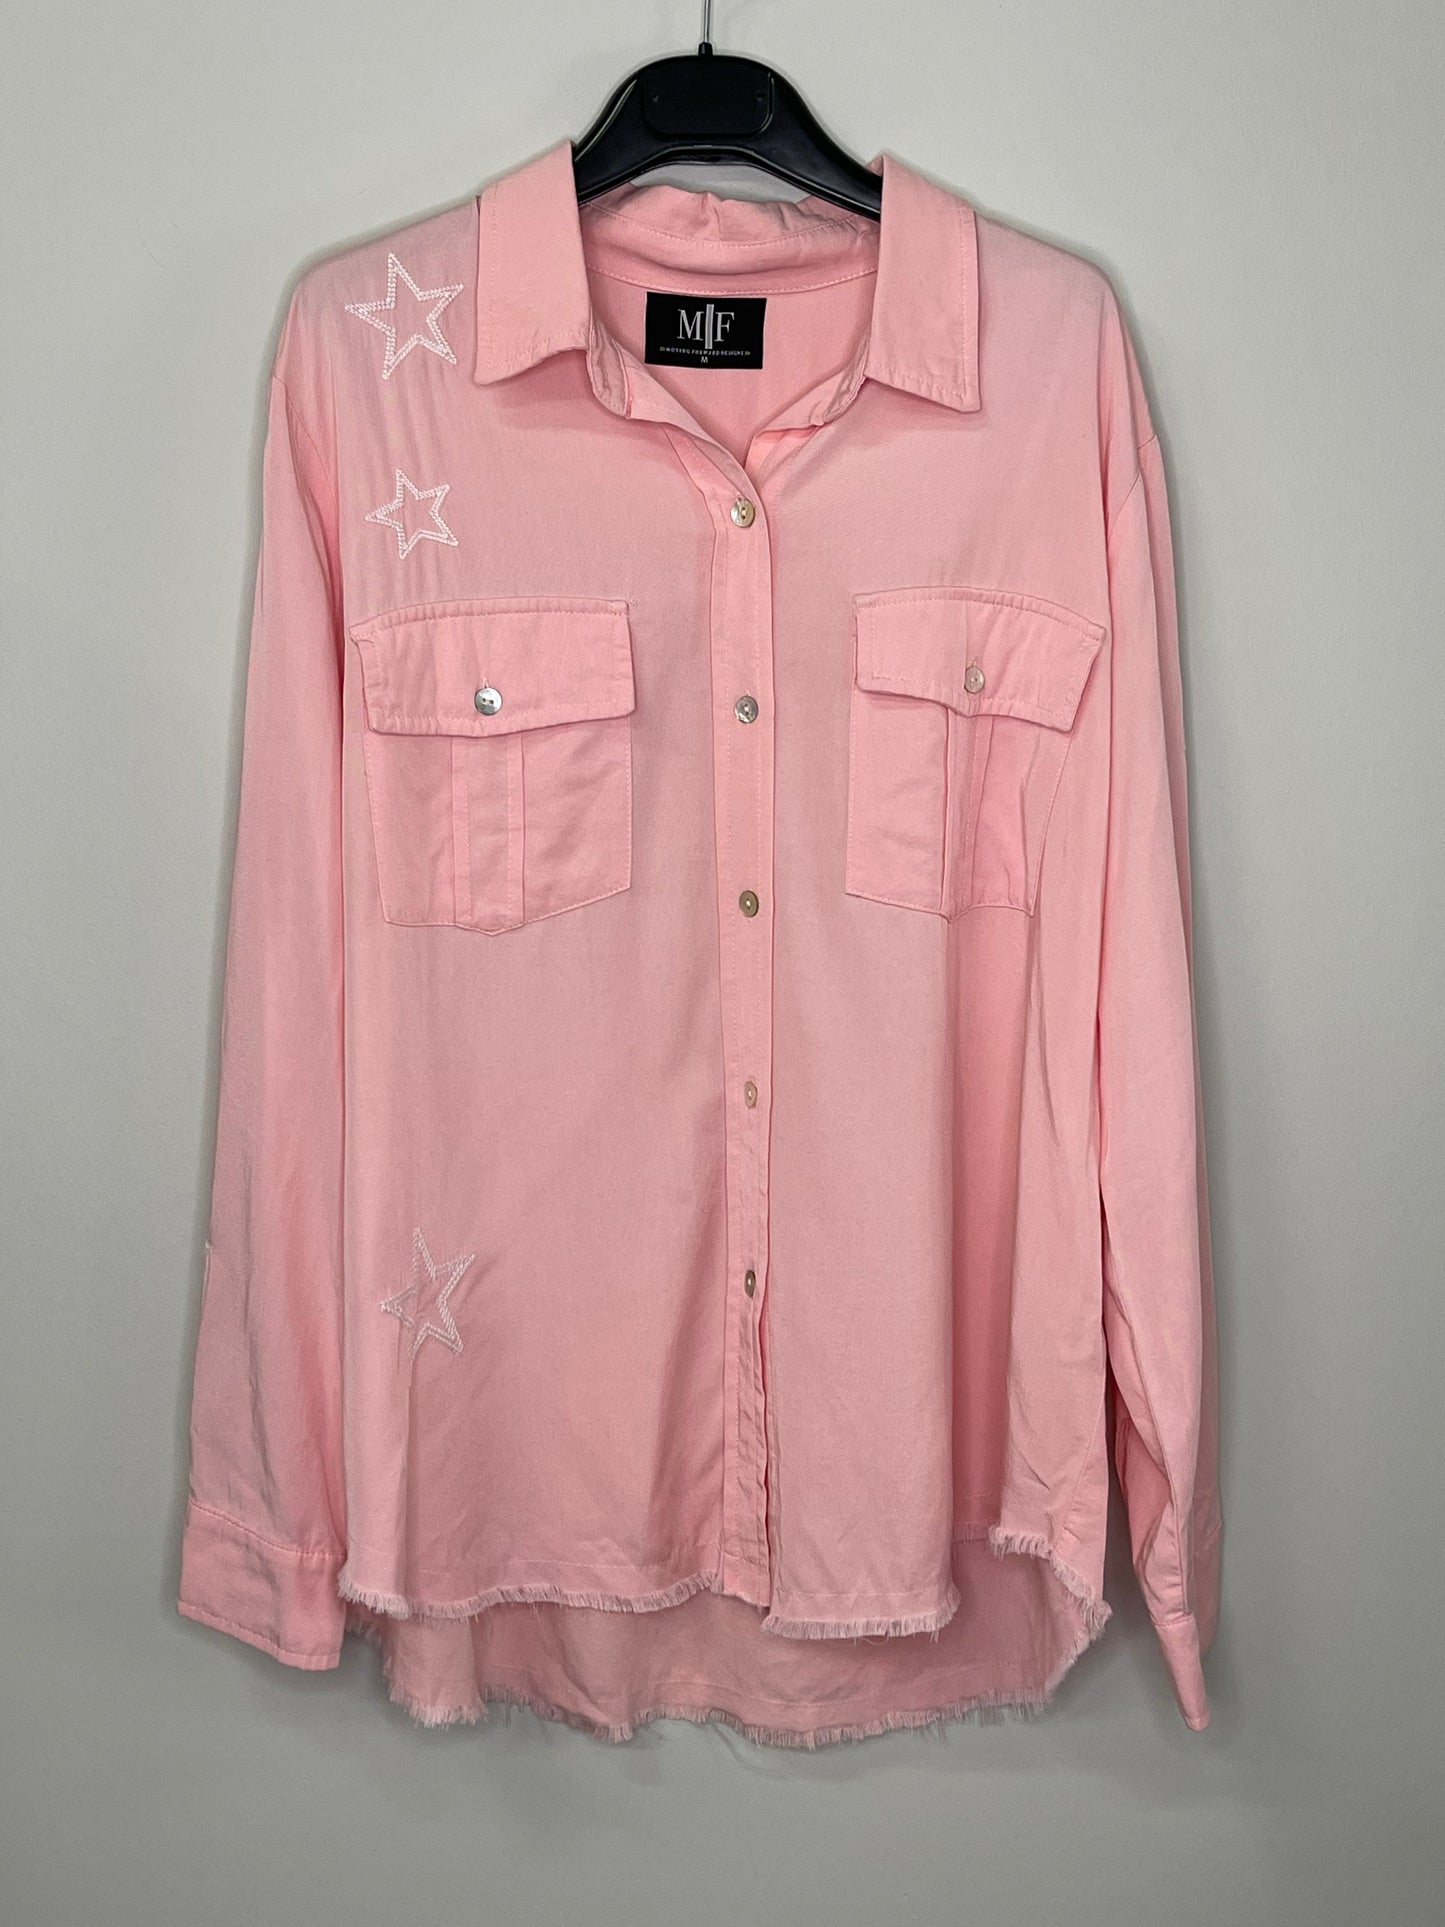 Shirt, Embroidered Star Light Pink, Love U More